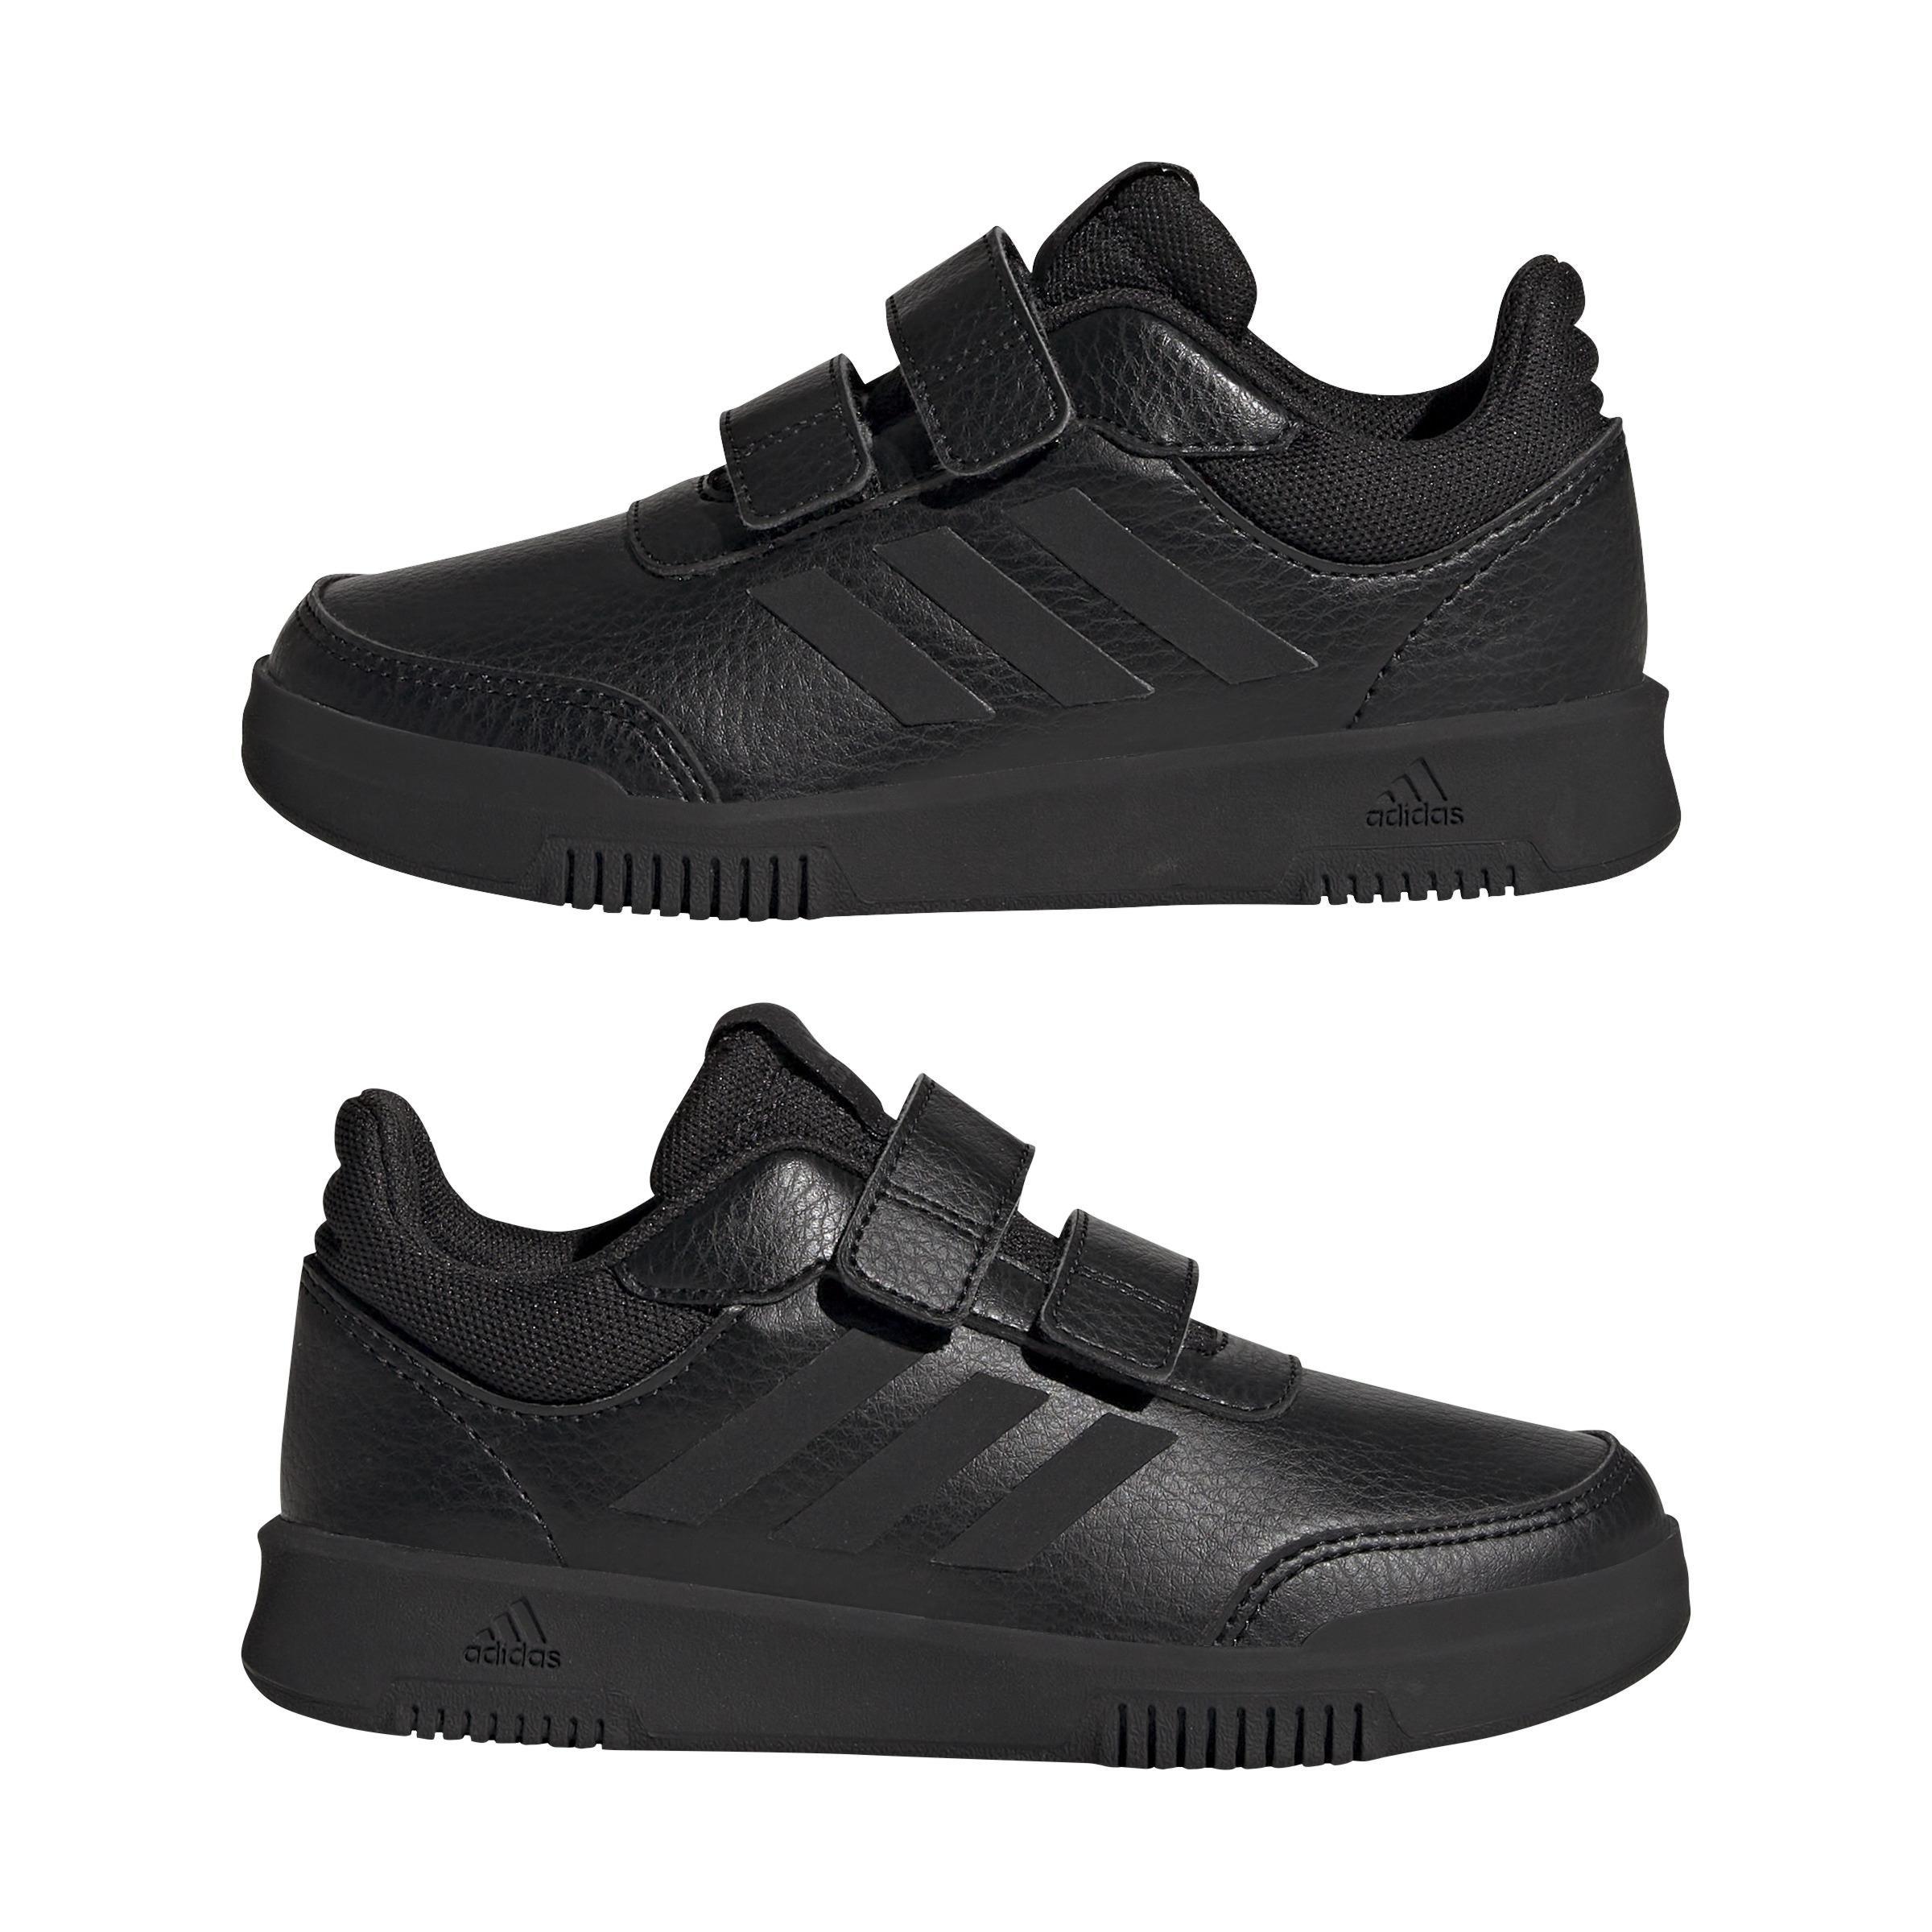 adidas - Unisex Kids Tensaur Sport Training Hook And Loop Shoes, Black